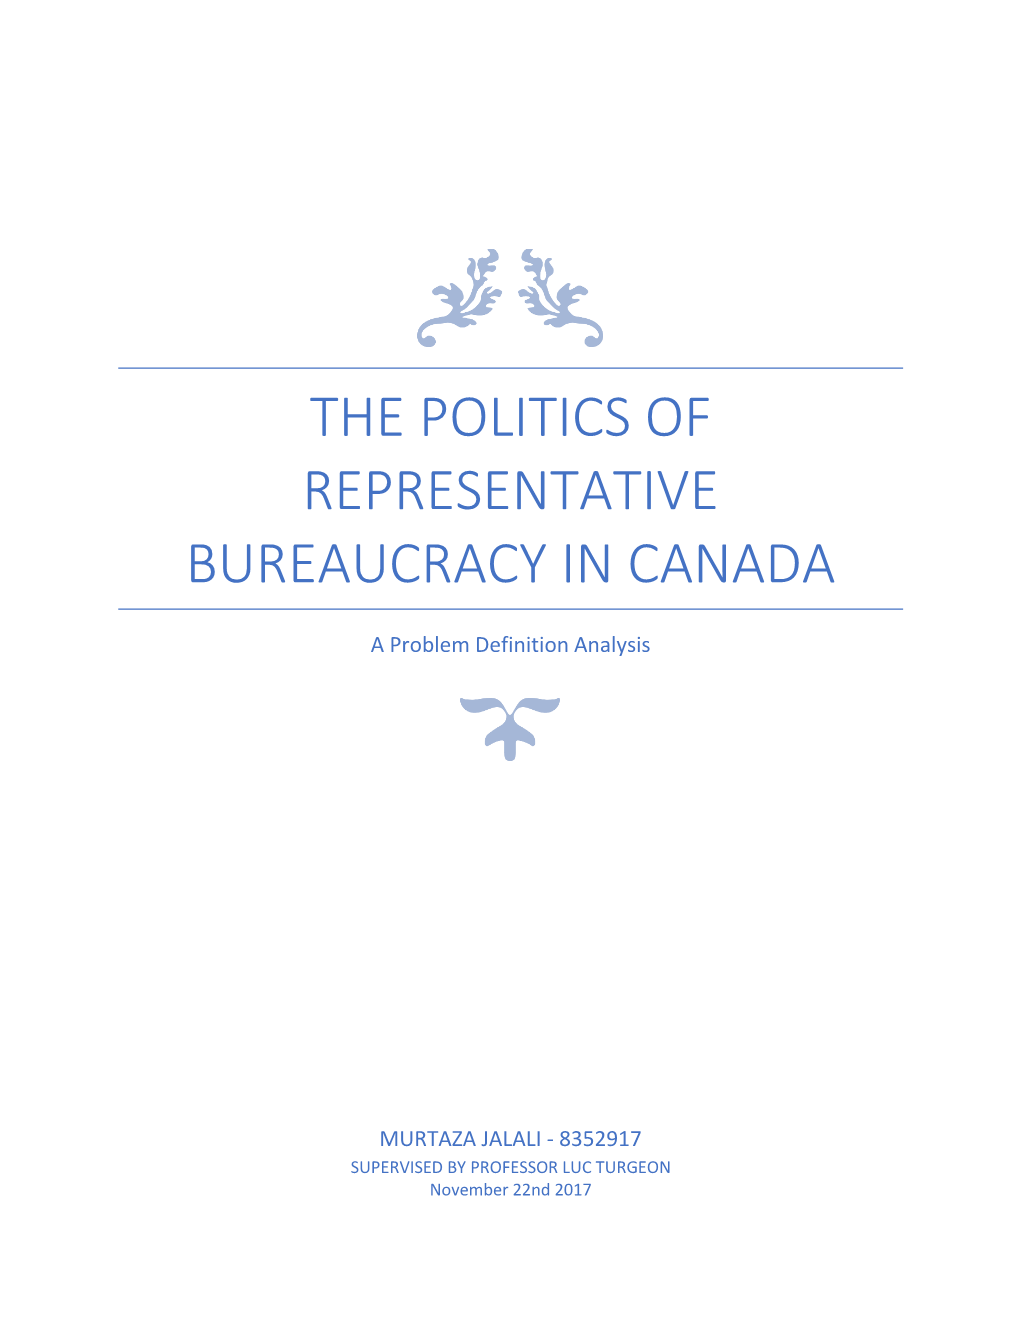 The Politics of Representative Bureaucracy in Canada